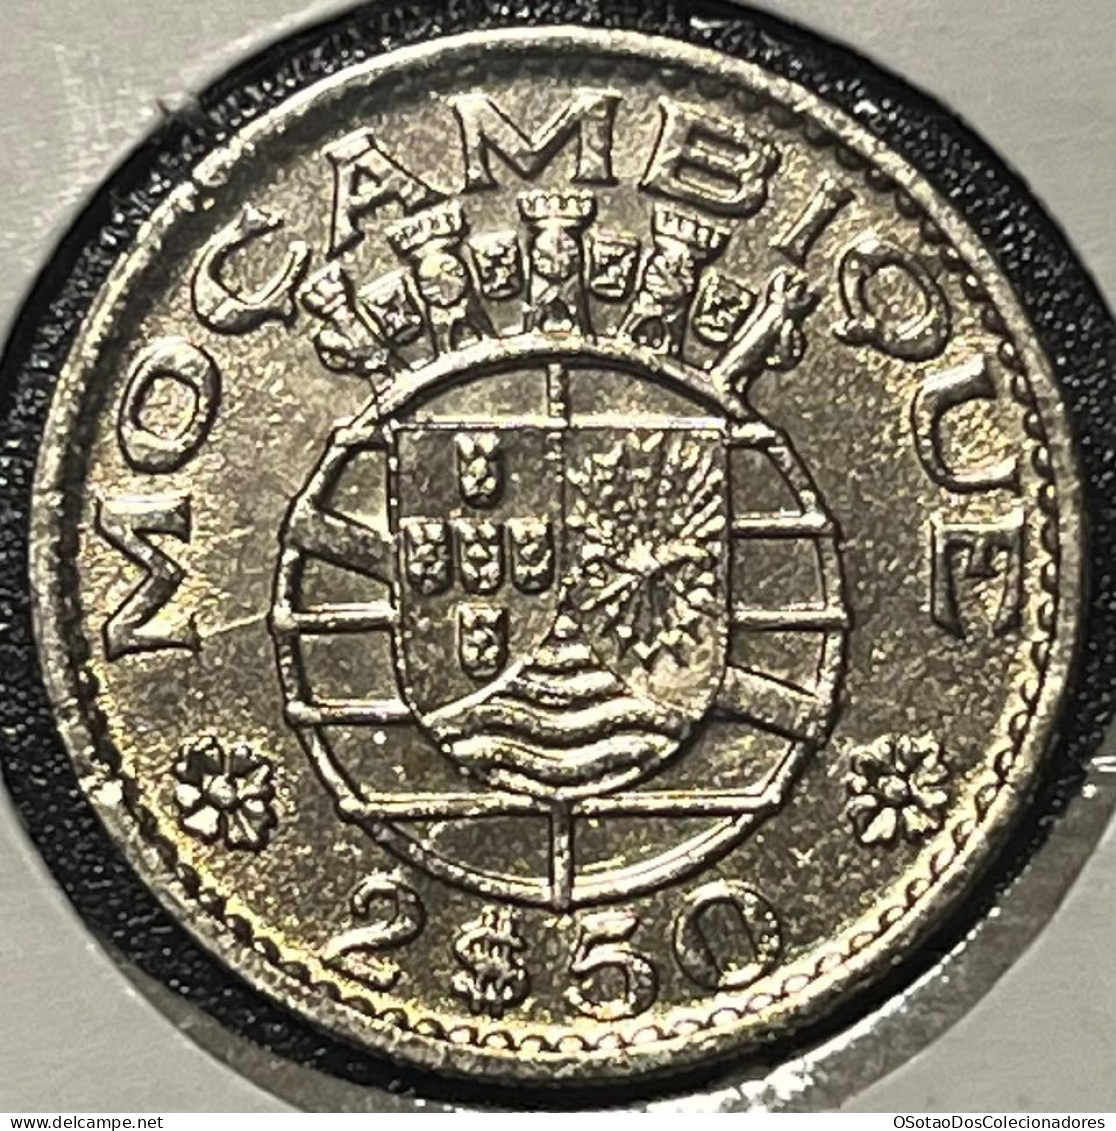 Moeda Moçambique Portugal - Coin Moçambique - 2$50 Escudos 1973 - MBC ++ - Mozambique